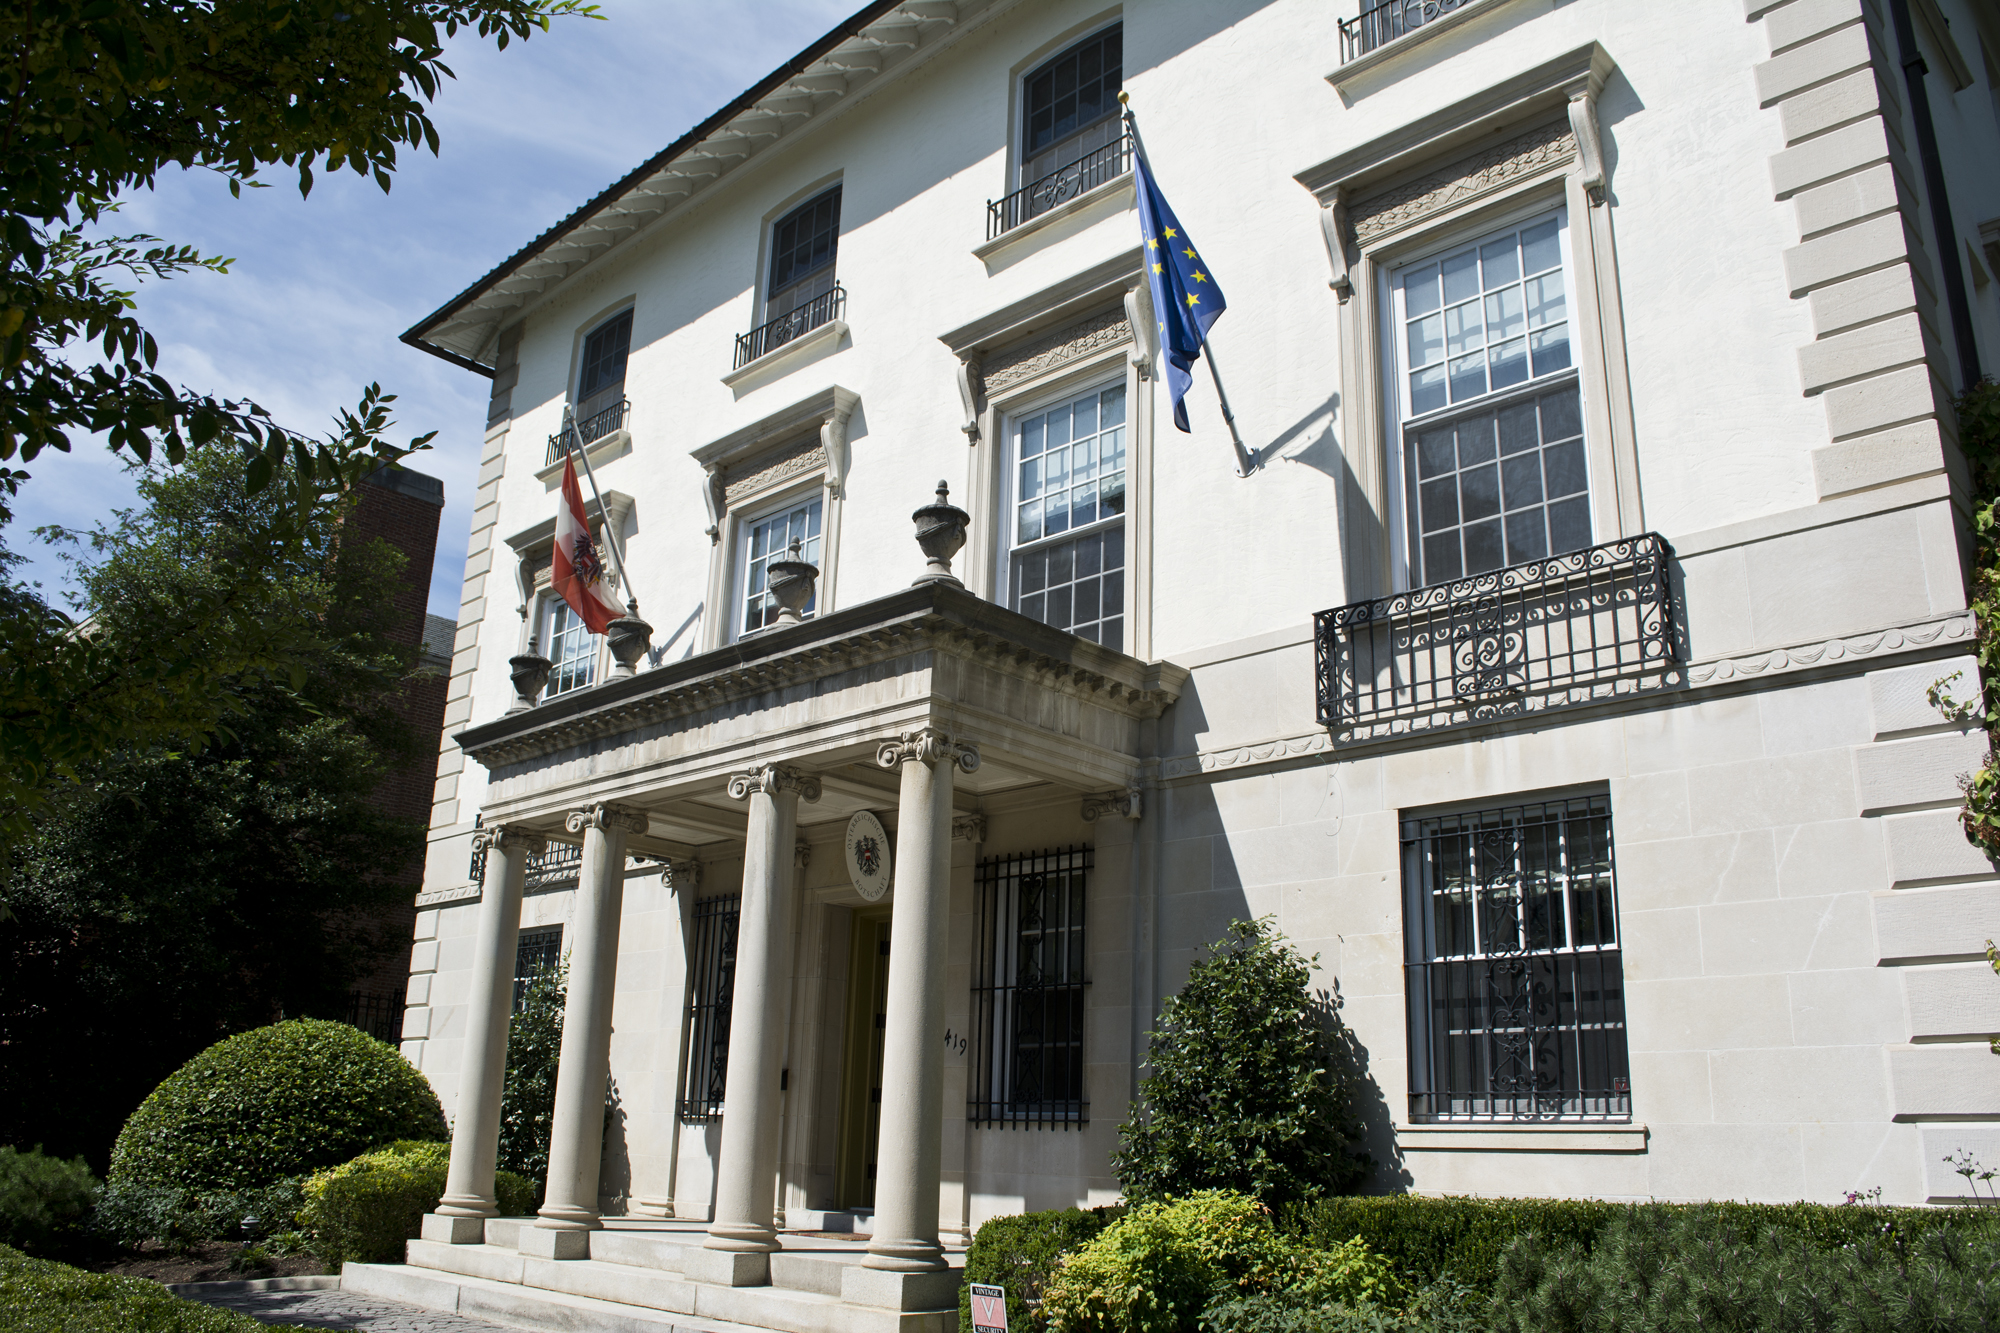 2419 Wyoming Avenue NW - Austrian ambassadorial residence - Washington DC - 2013-09-15